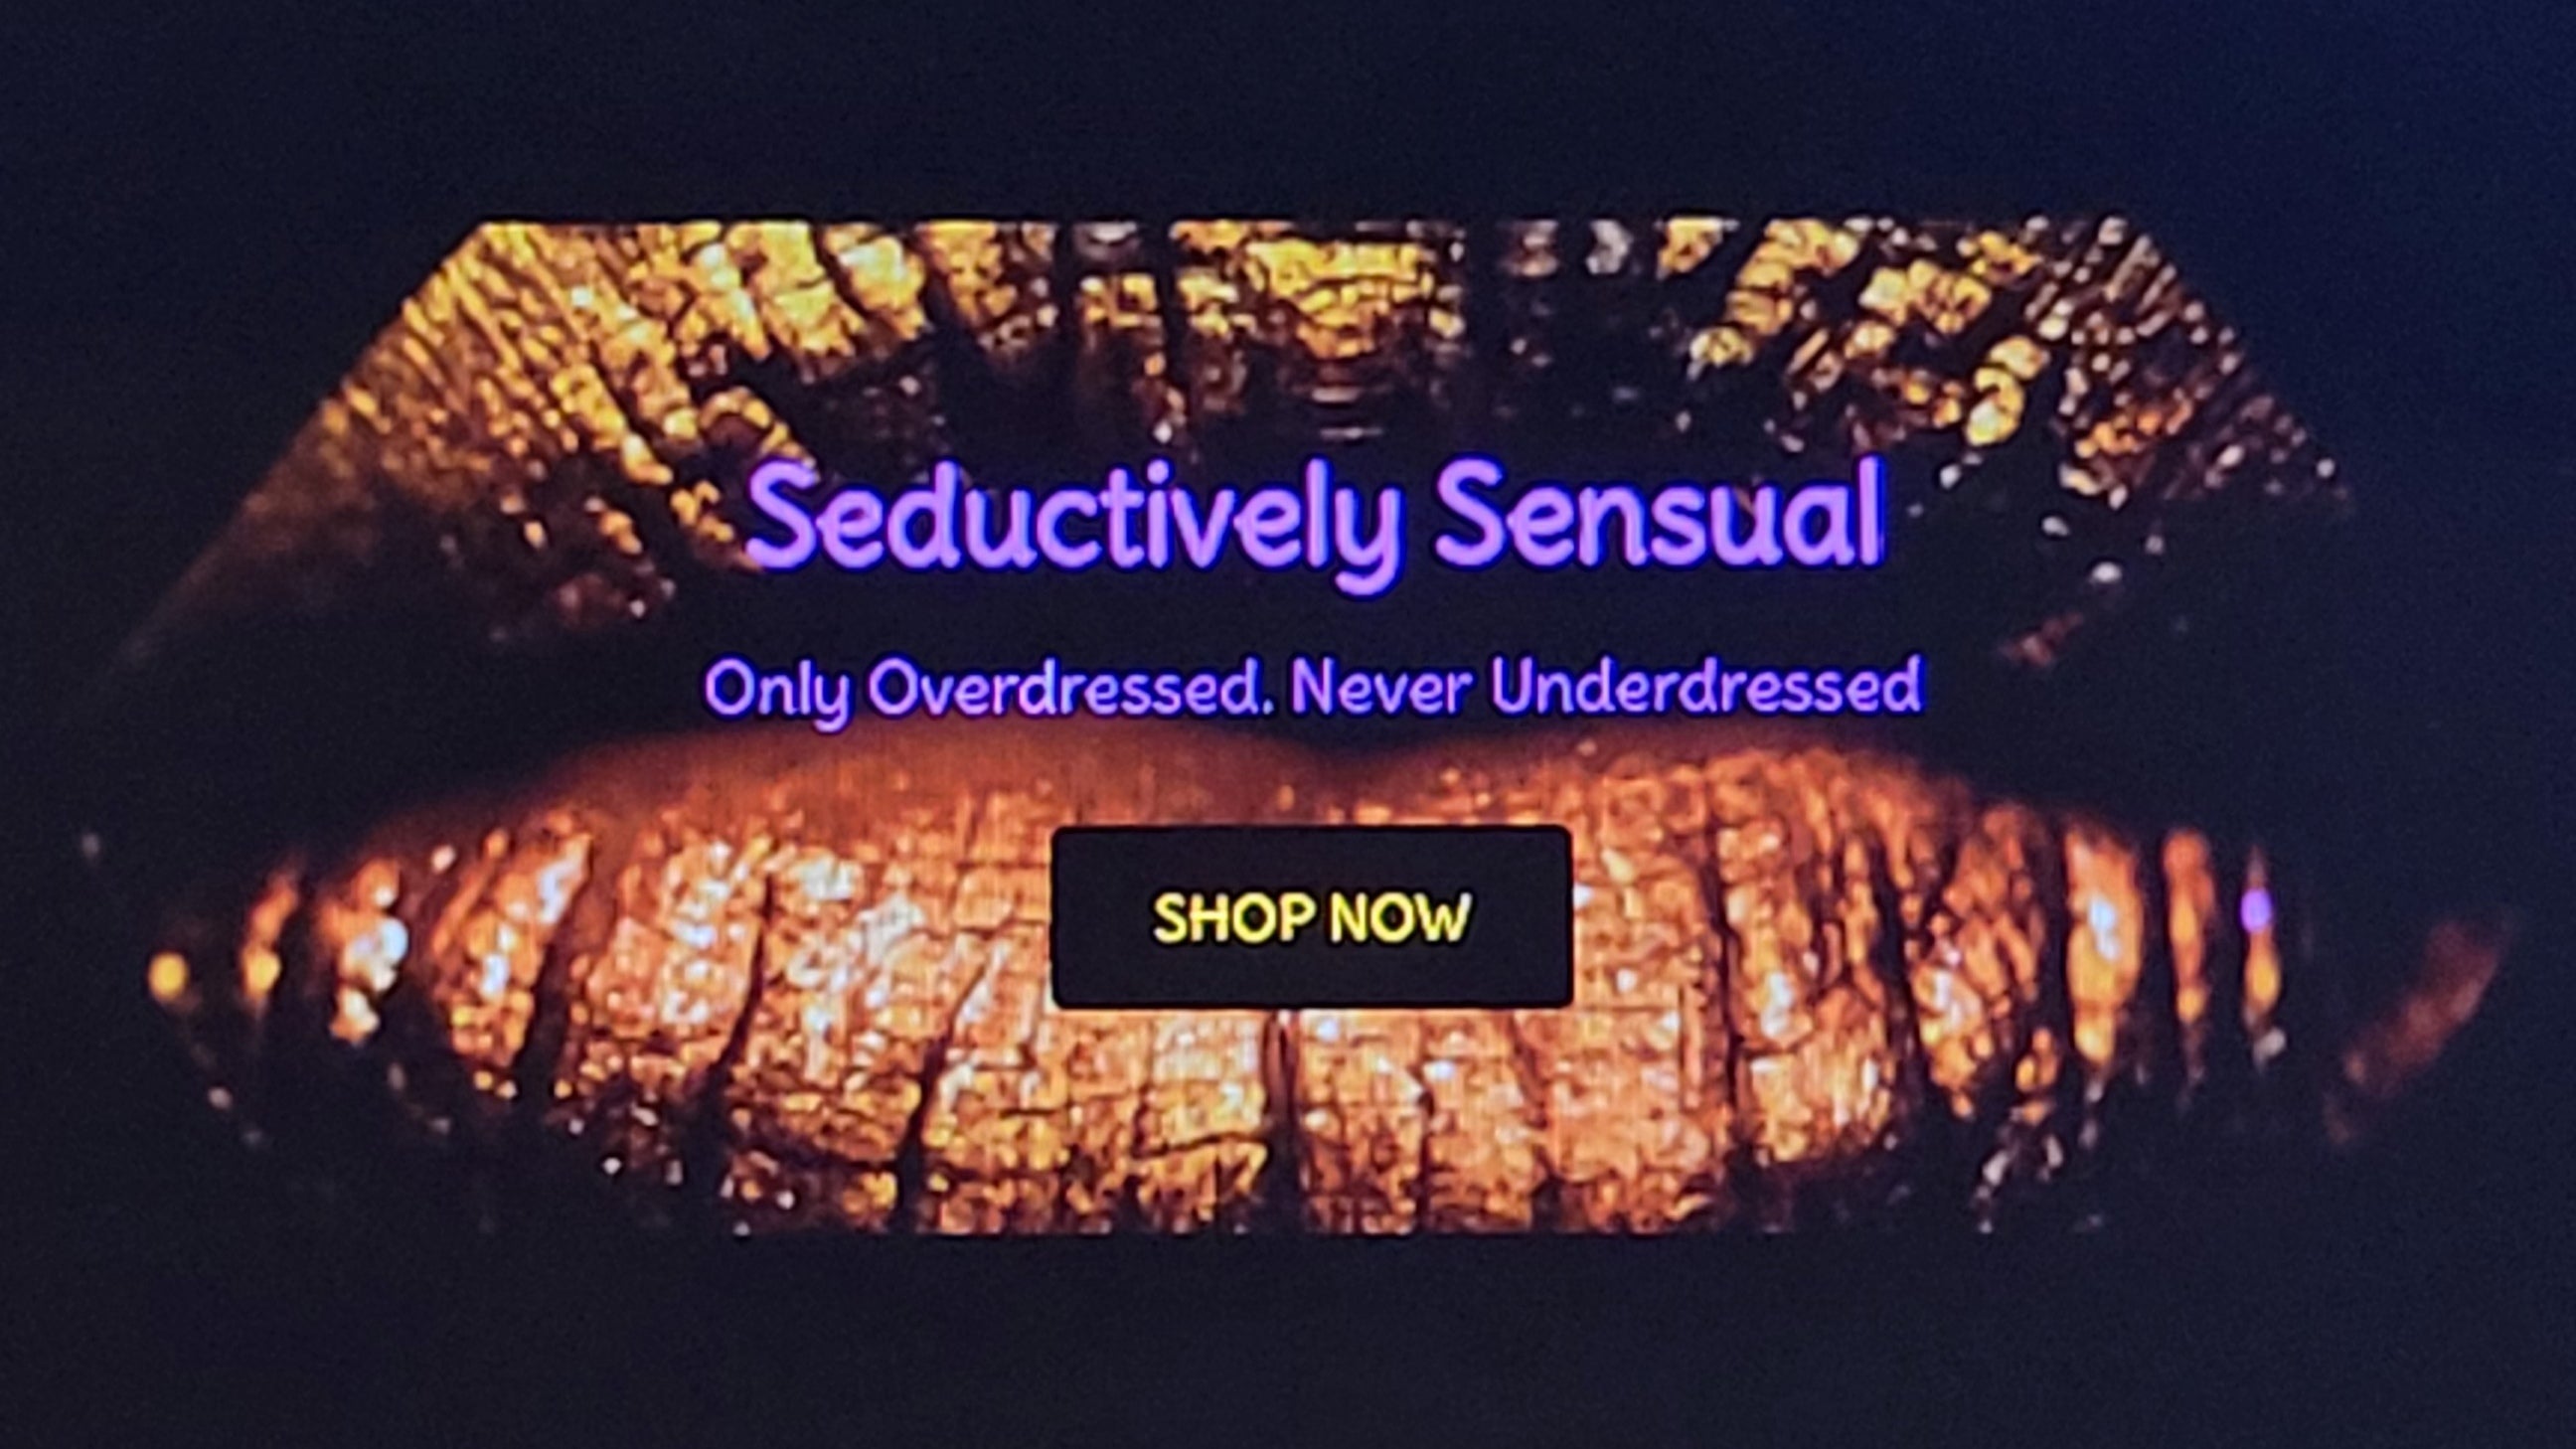 Seductively Sensual